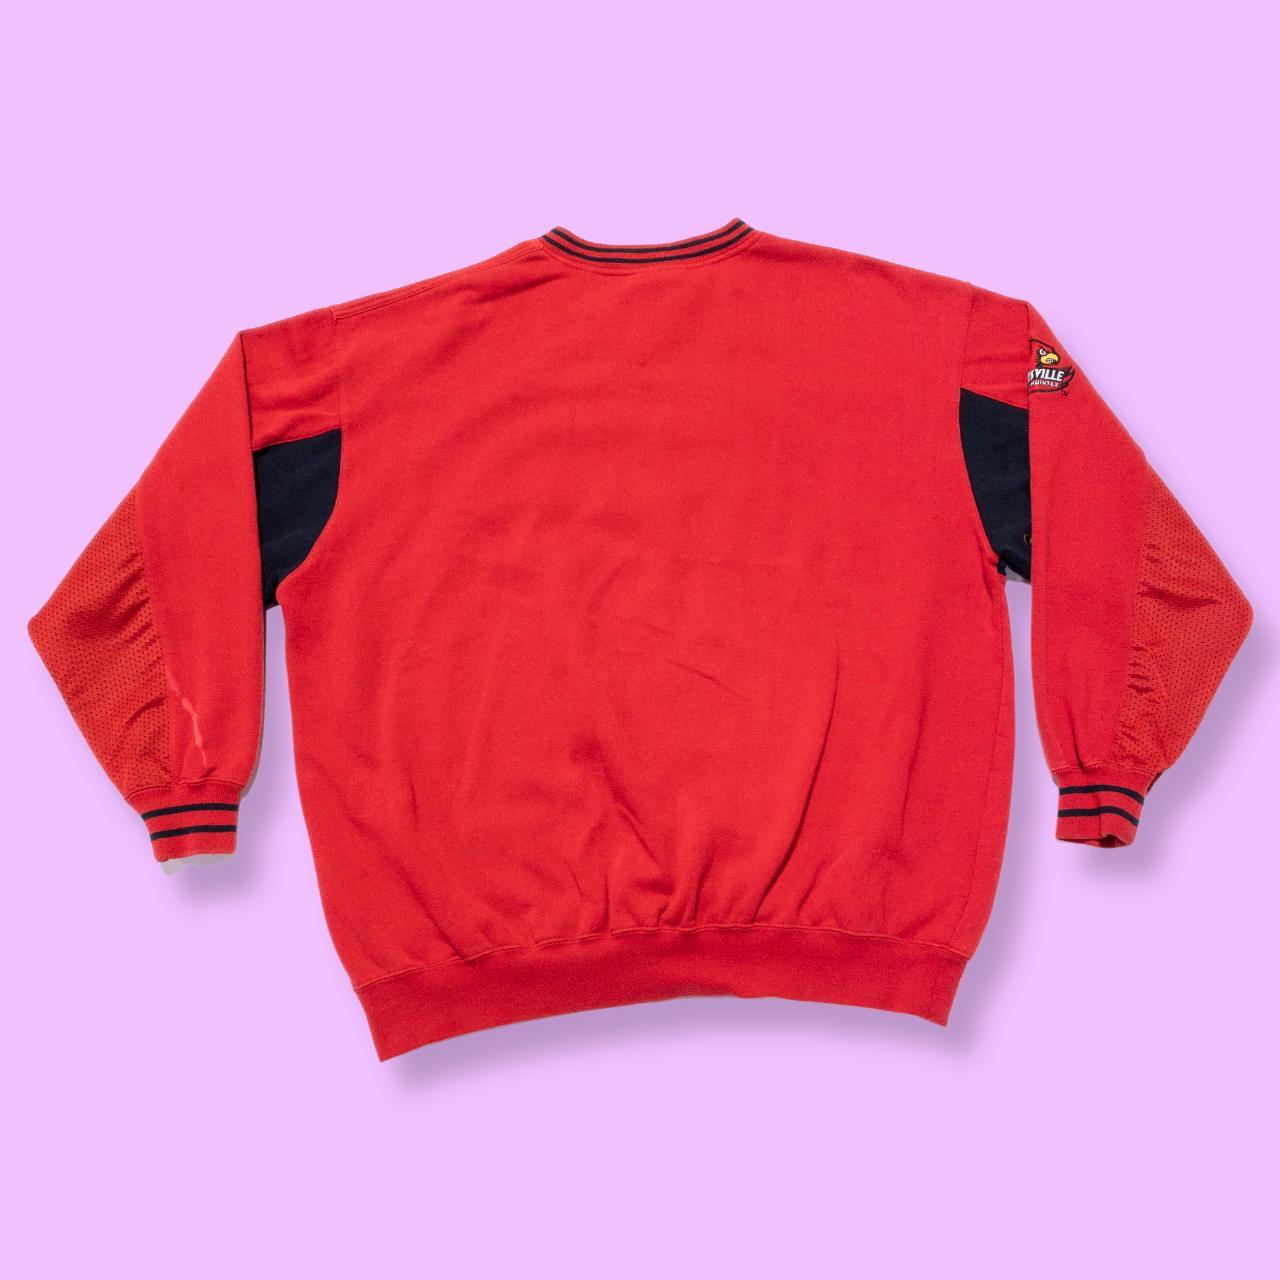 kids louisville cardinal sweatshirt